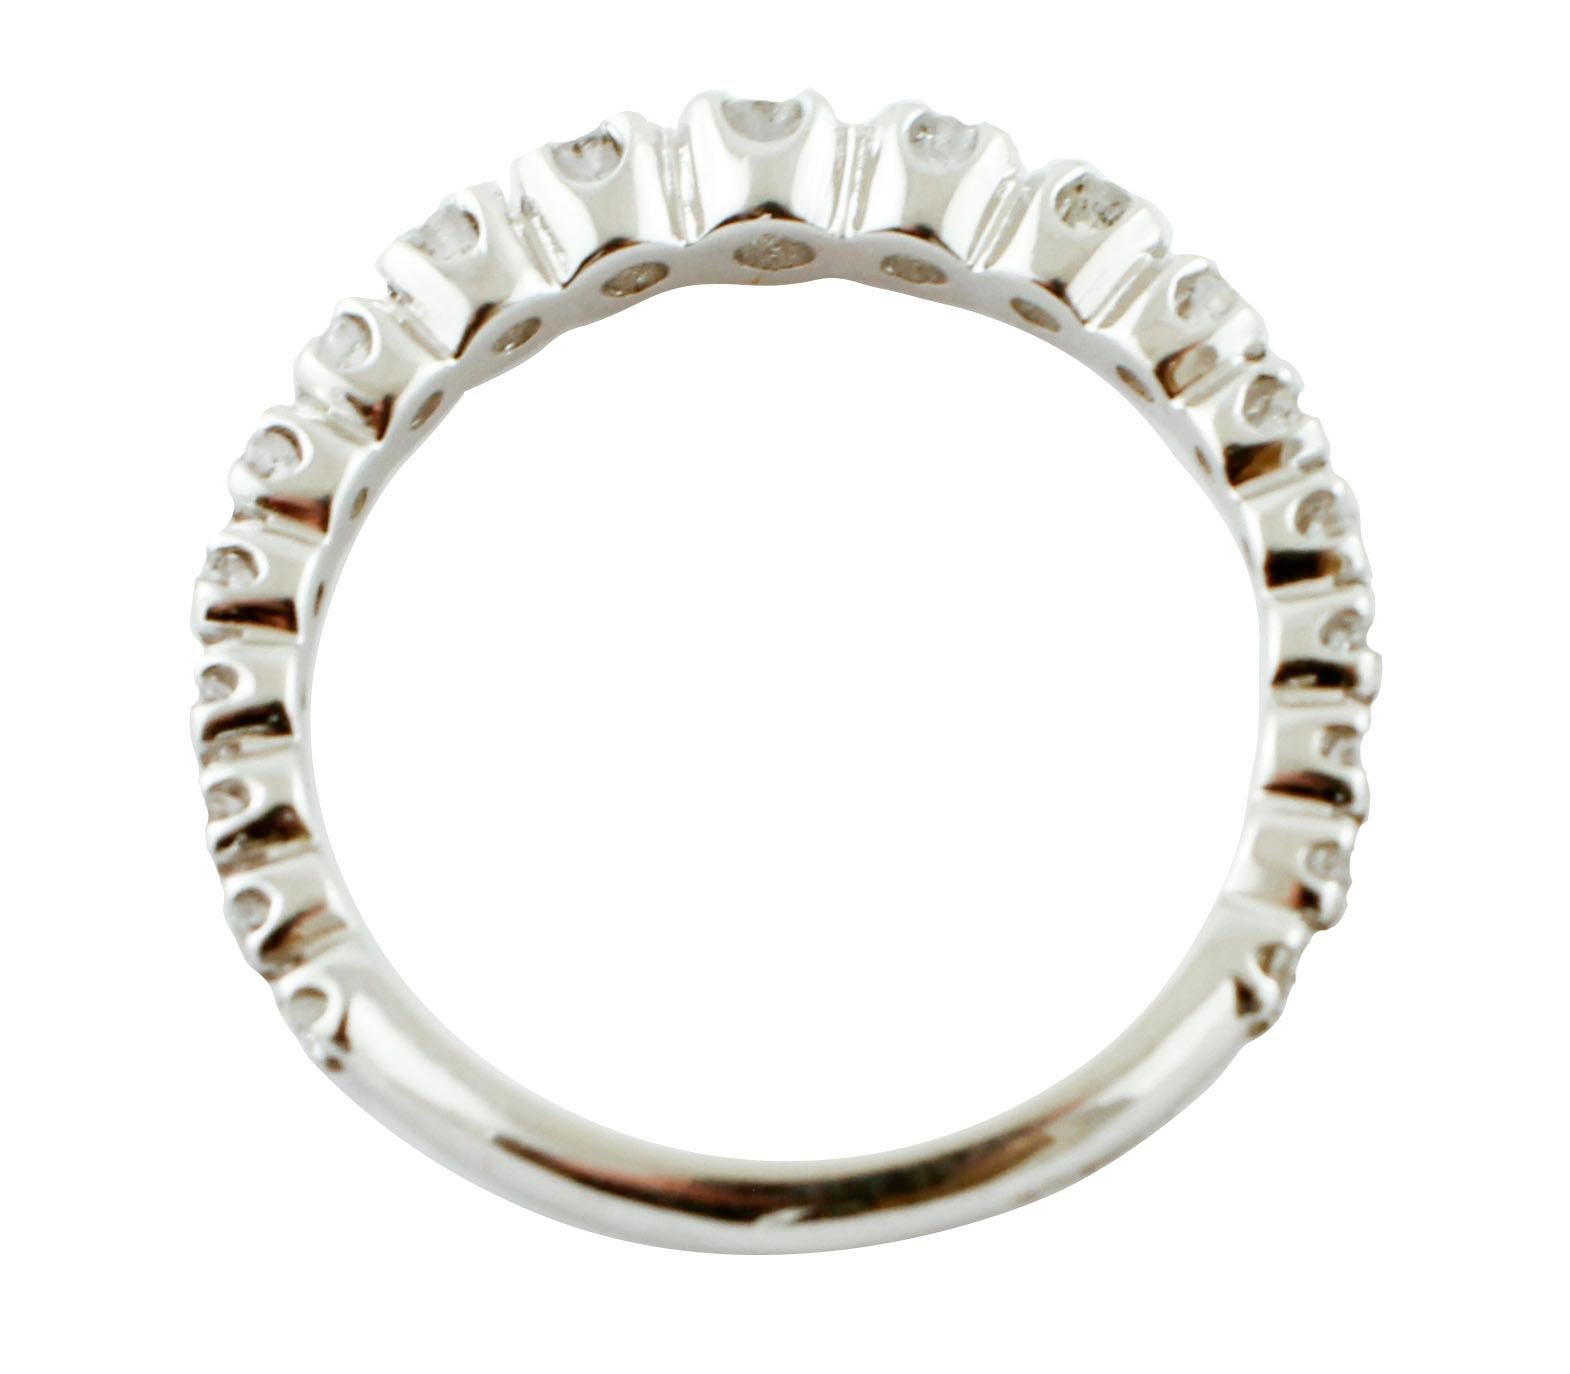 Brilliant Cut Diamonds, 18 Karat White Gold Eternity Engagement/Wedding Ring